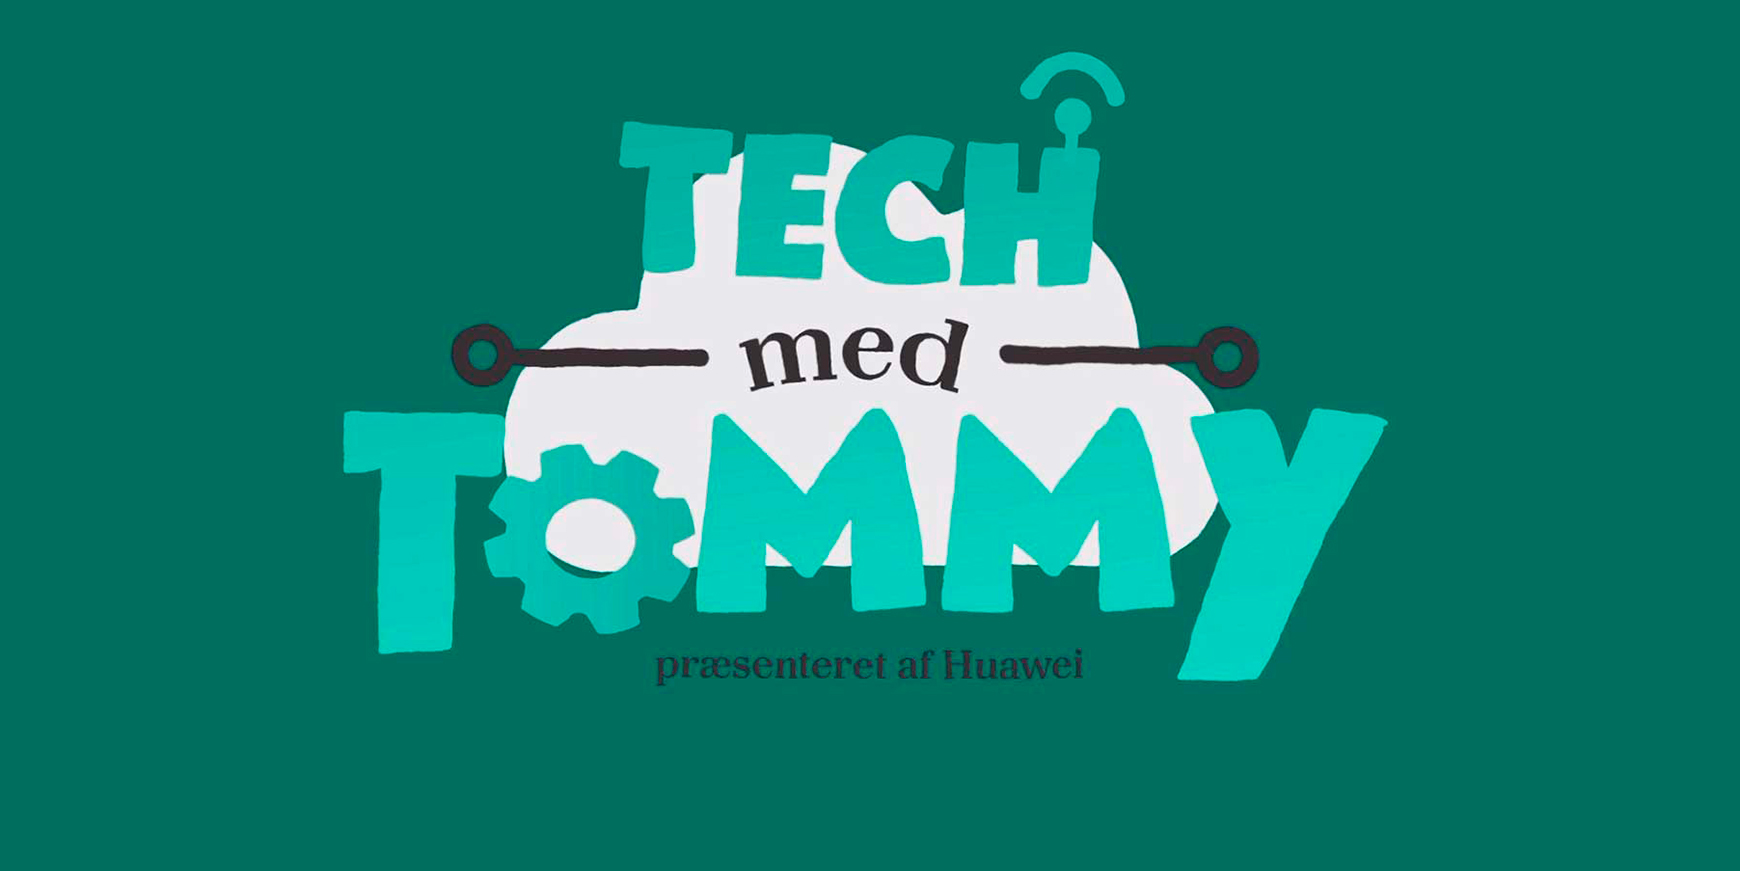 Tech Med Tommy Huawei